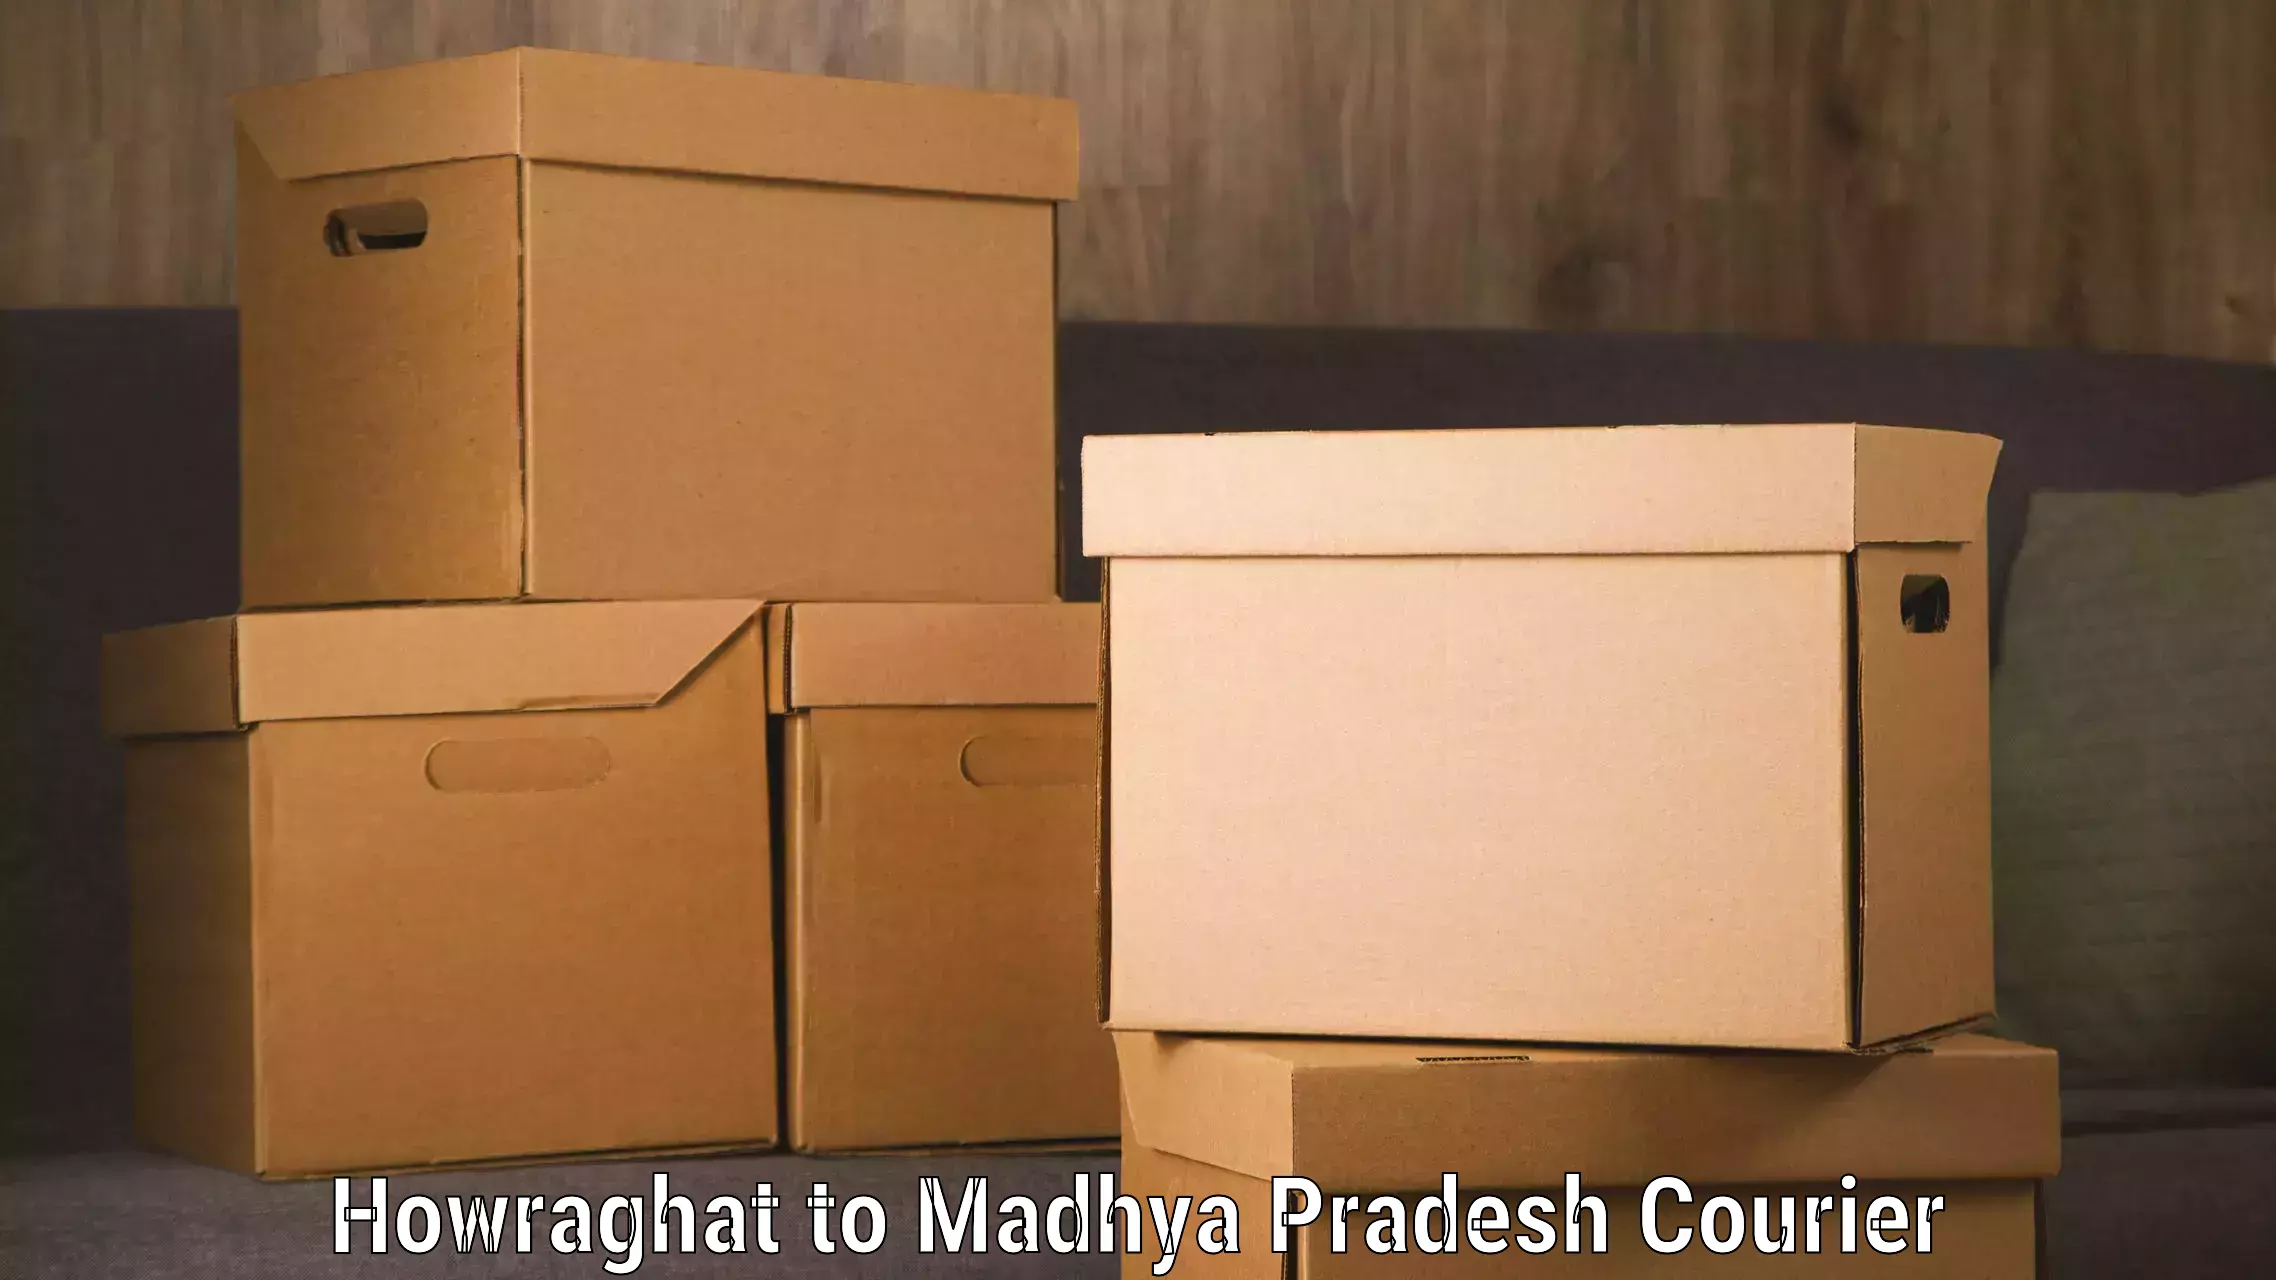 Urgent luggage shipment Howraghat to Sendhwa